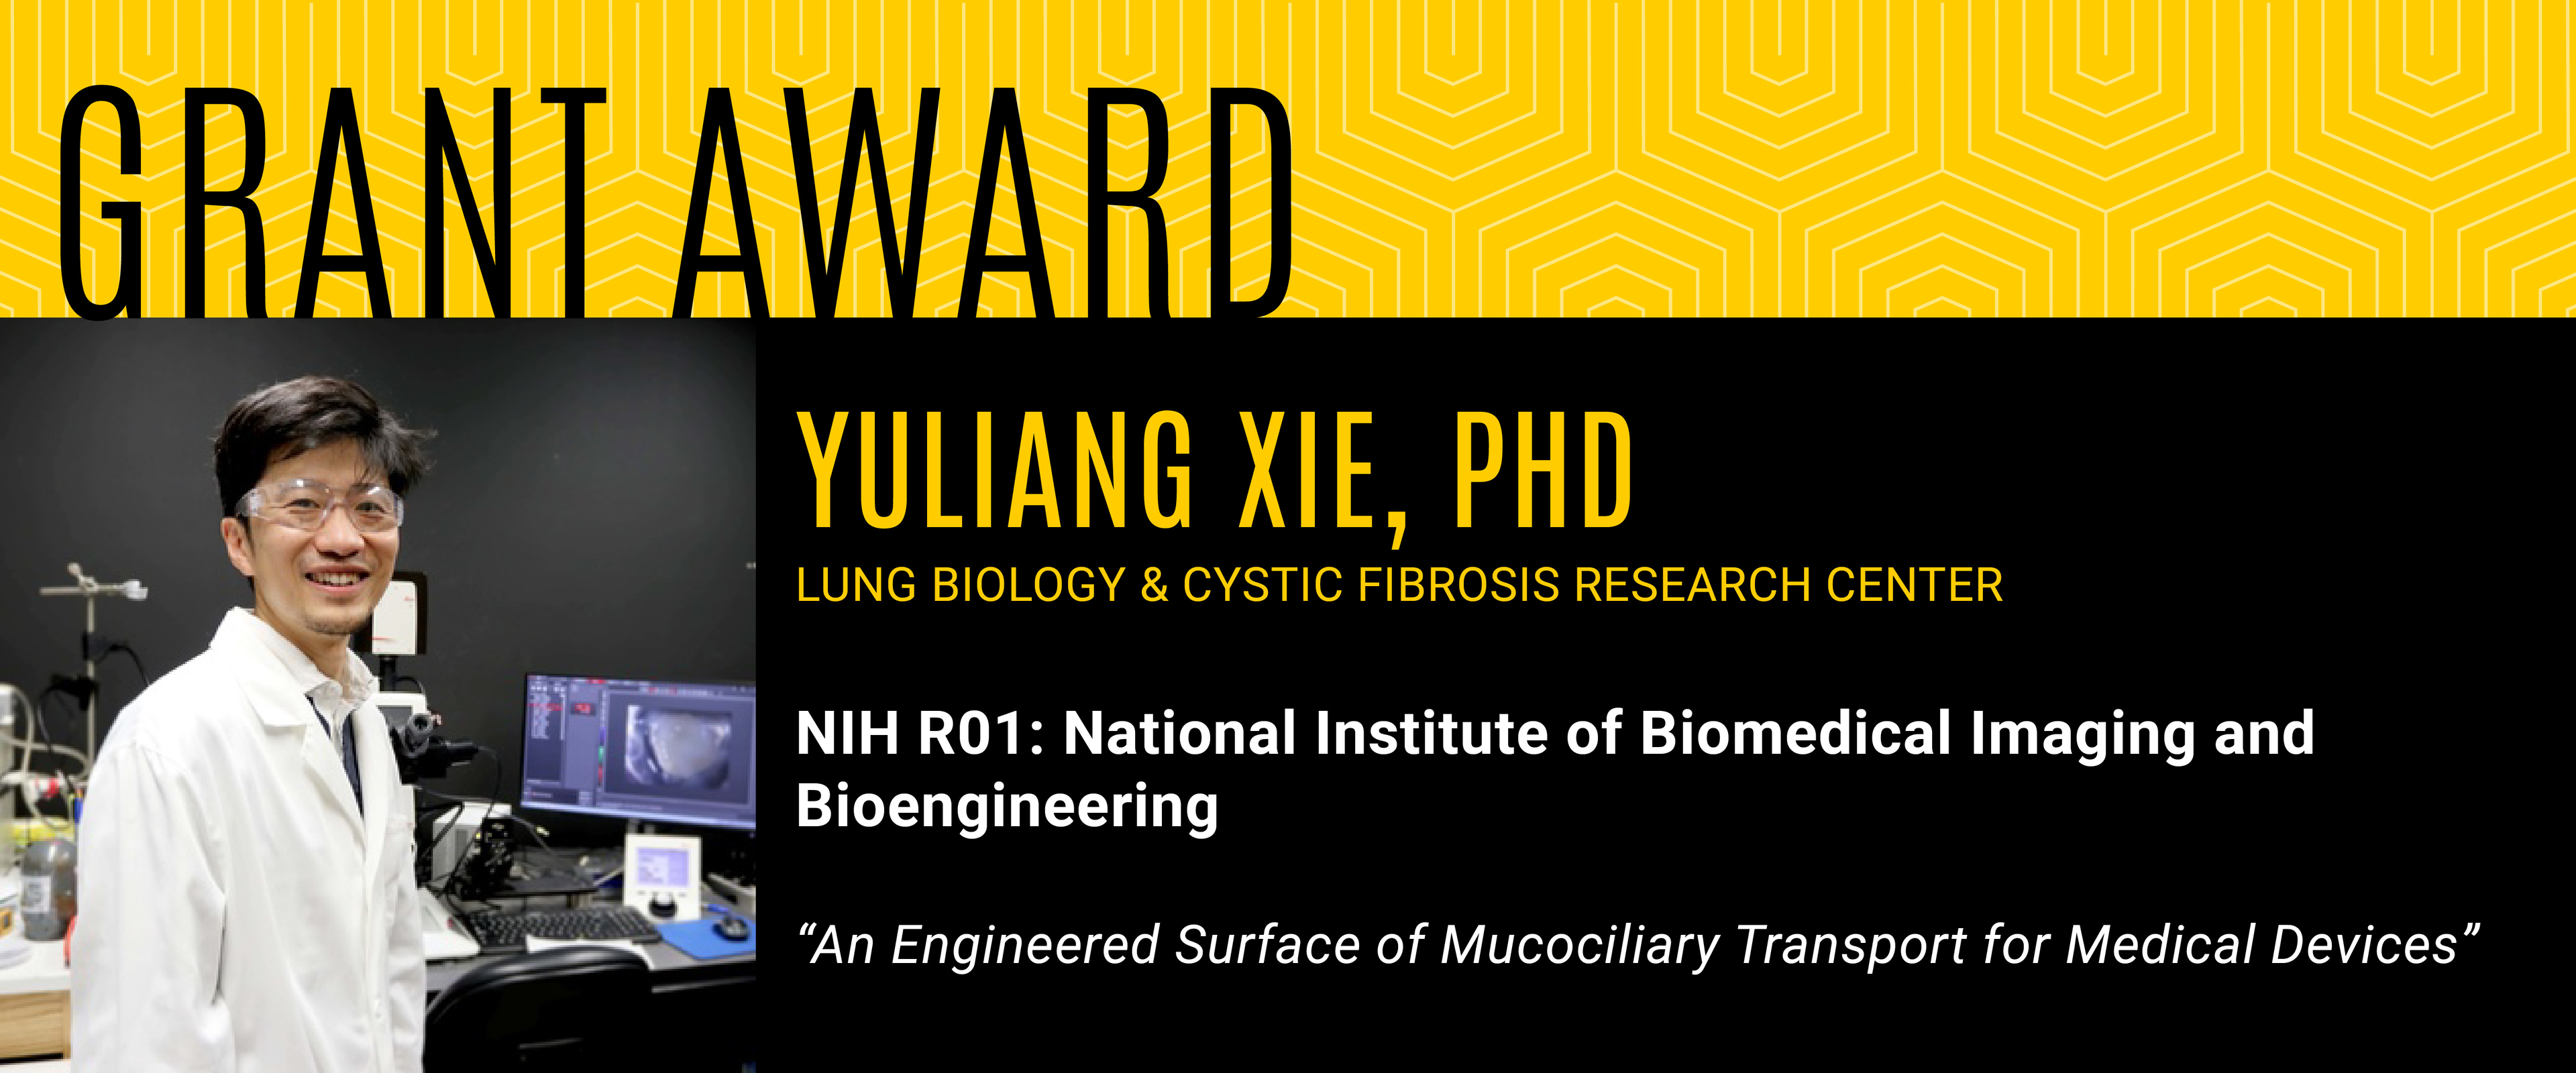 Yuliang Xie PhD Grant Award